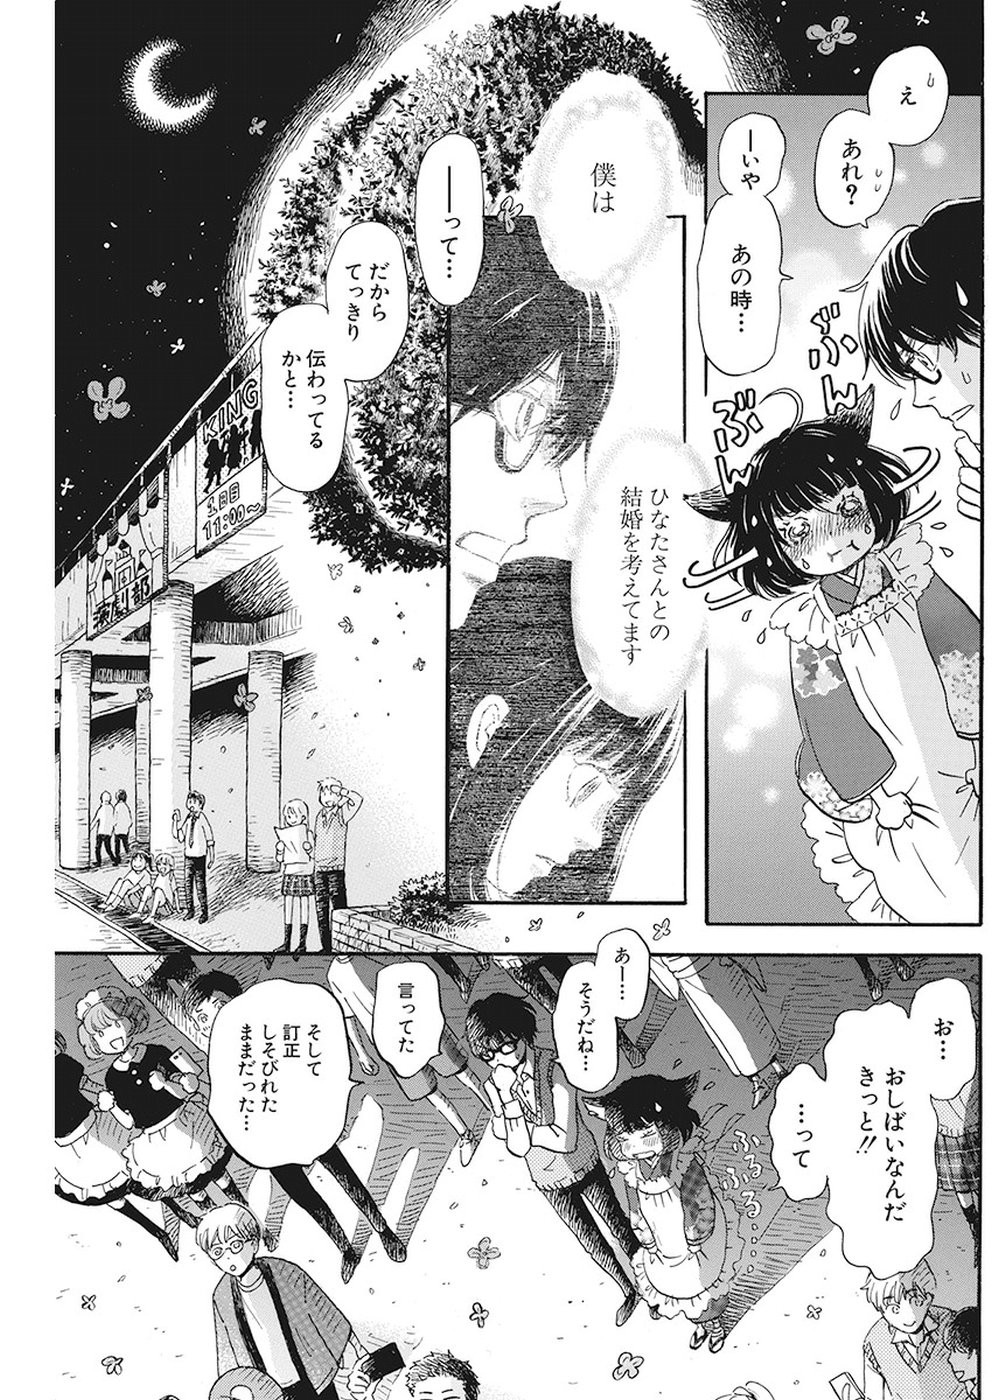 3 Gatsu no Lion - Chapter 155 - Page 3